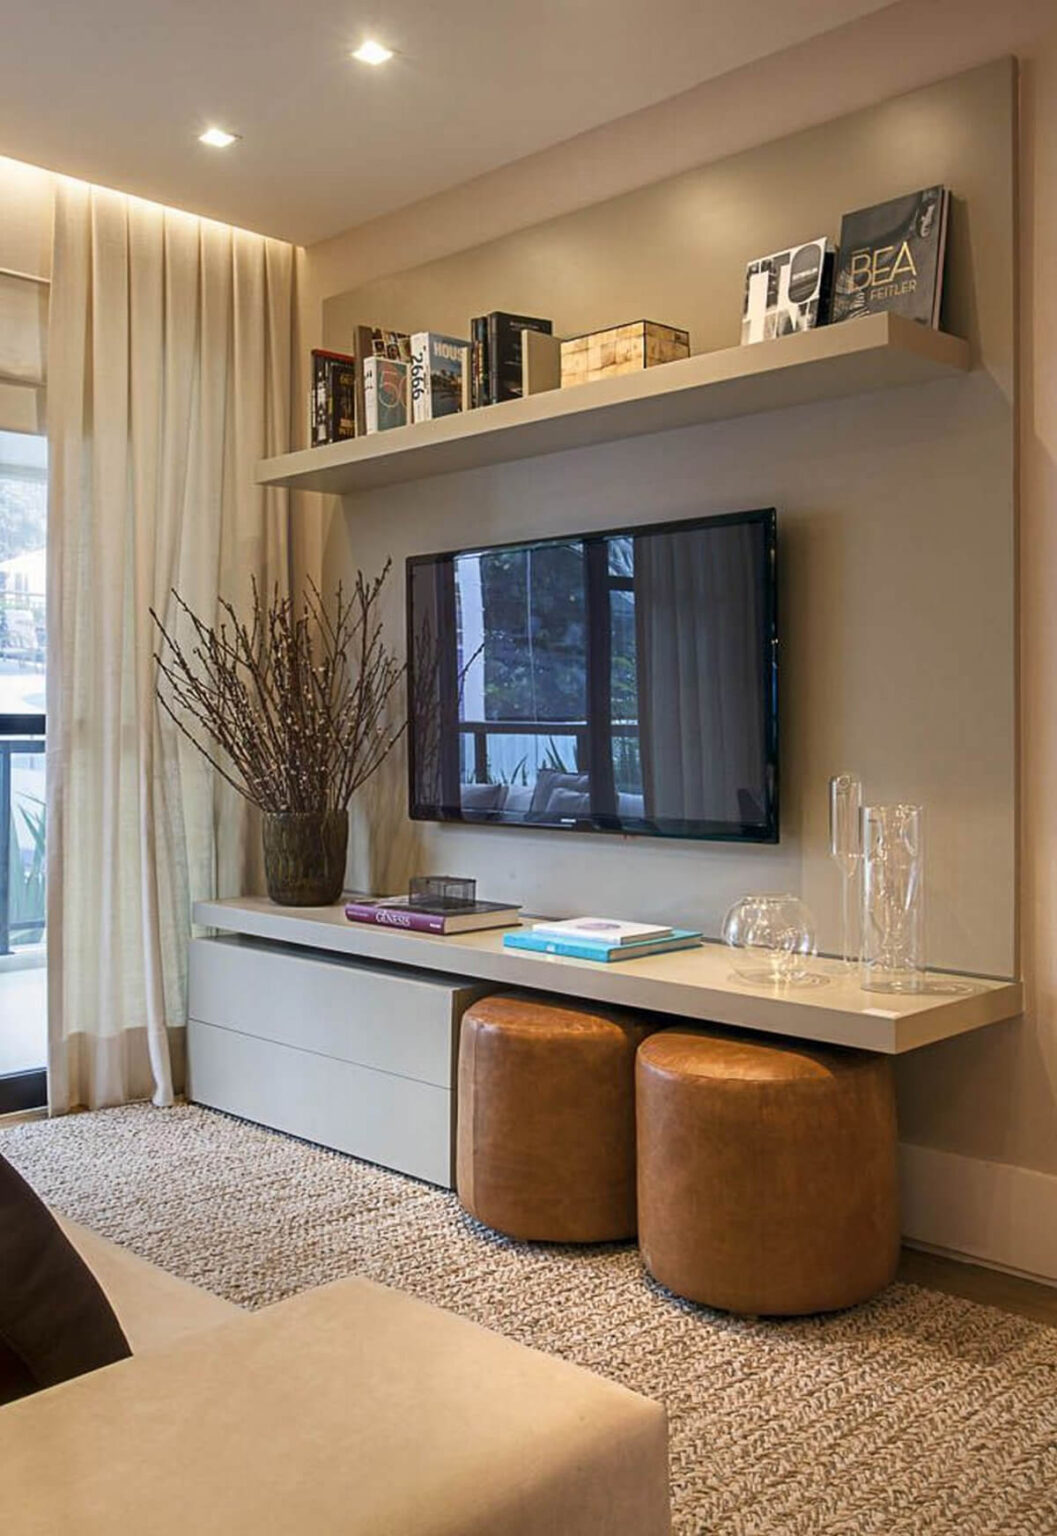 02 Beige Living Room Design Ideas Homebnc 1057x1536 